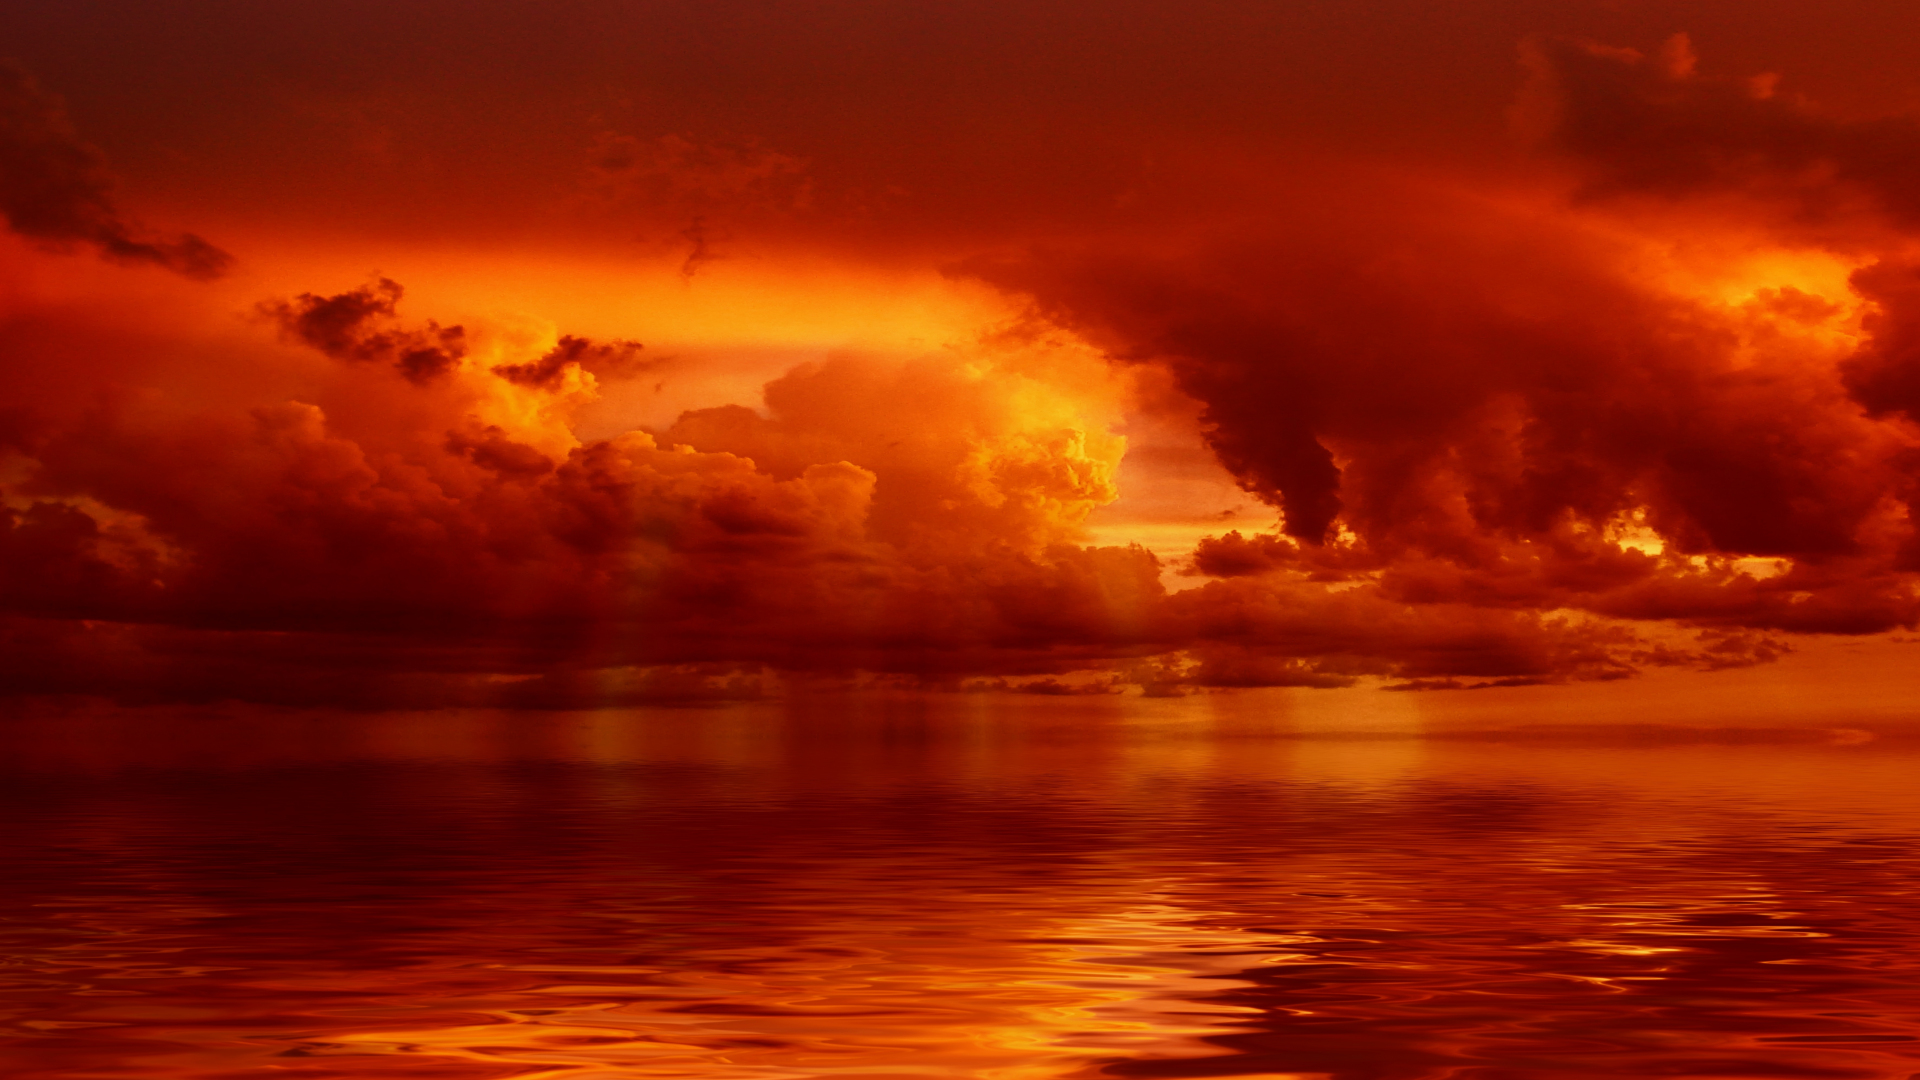 Download Wallpaper 1920x1080 Red Clouds Storm Sunset Art Full Hd